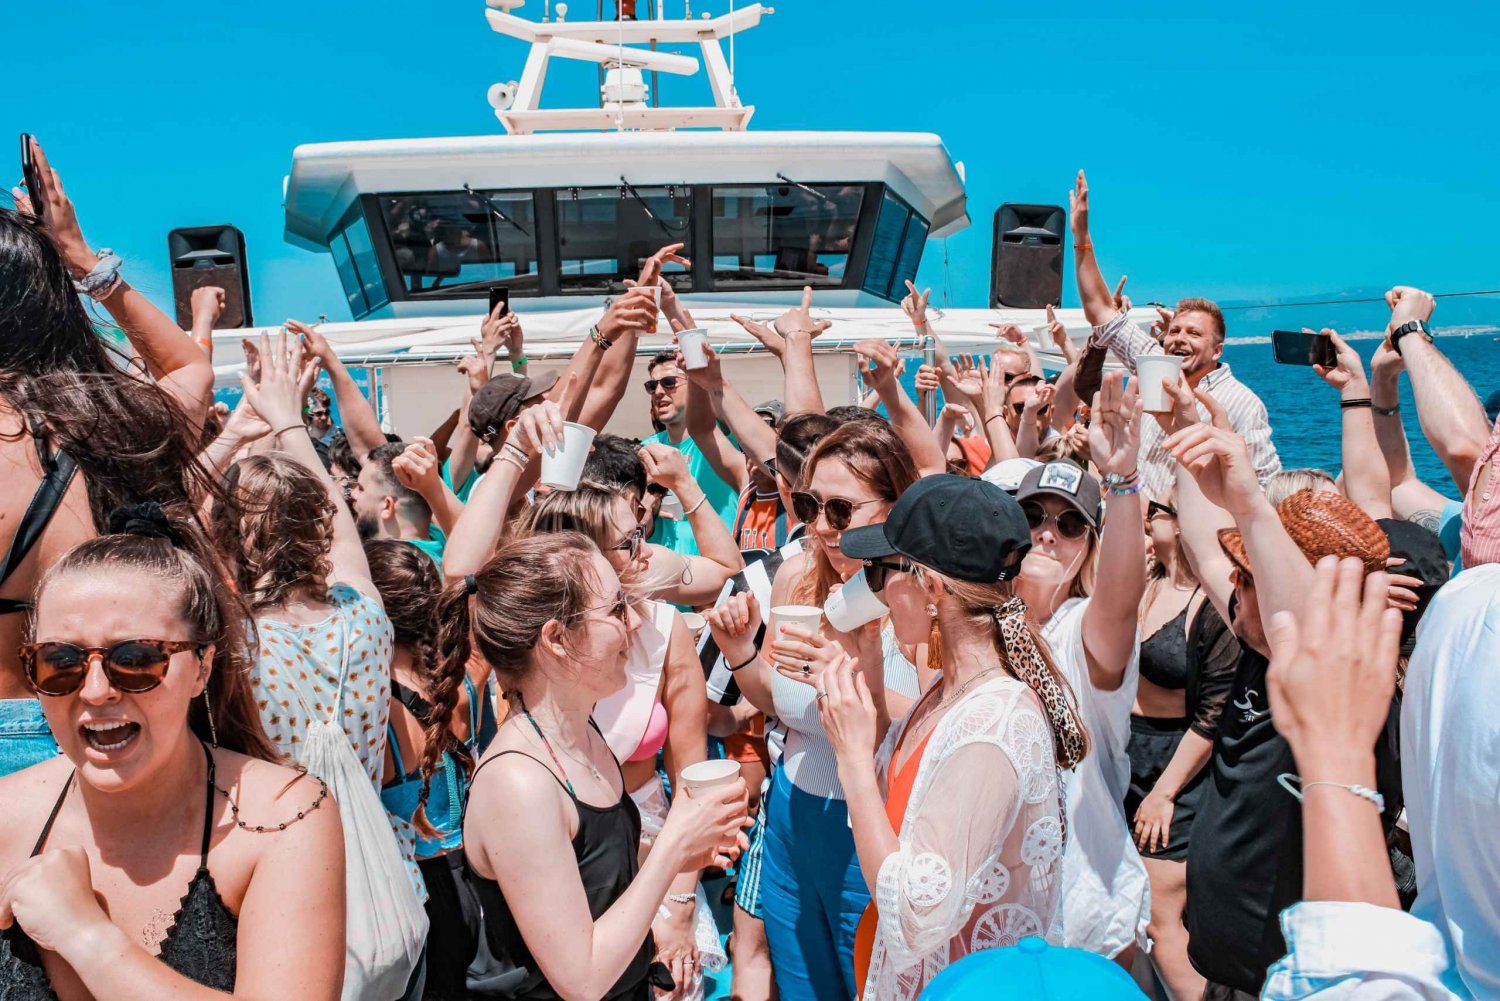 Playa de Palma : Boat Party avec DJ, buffet et animations